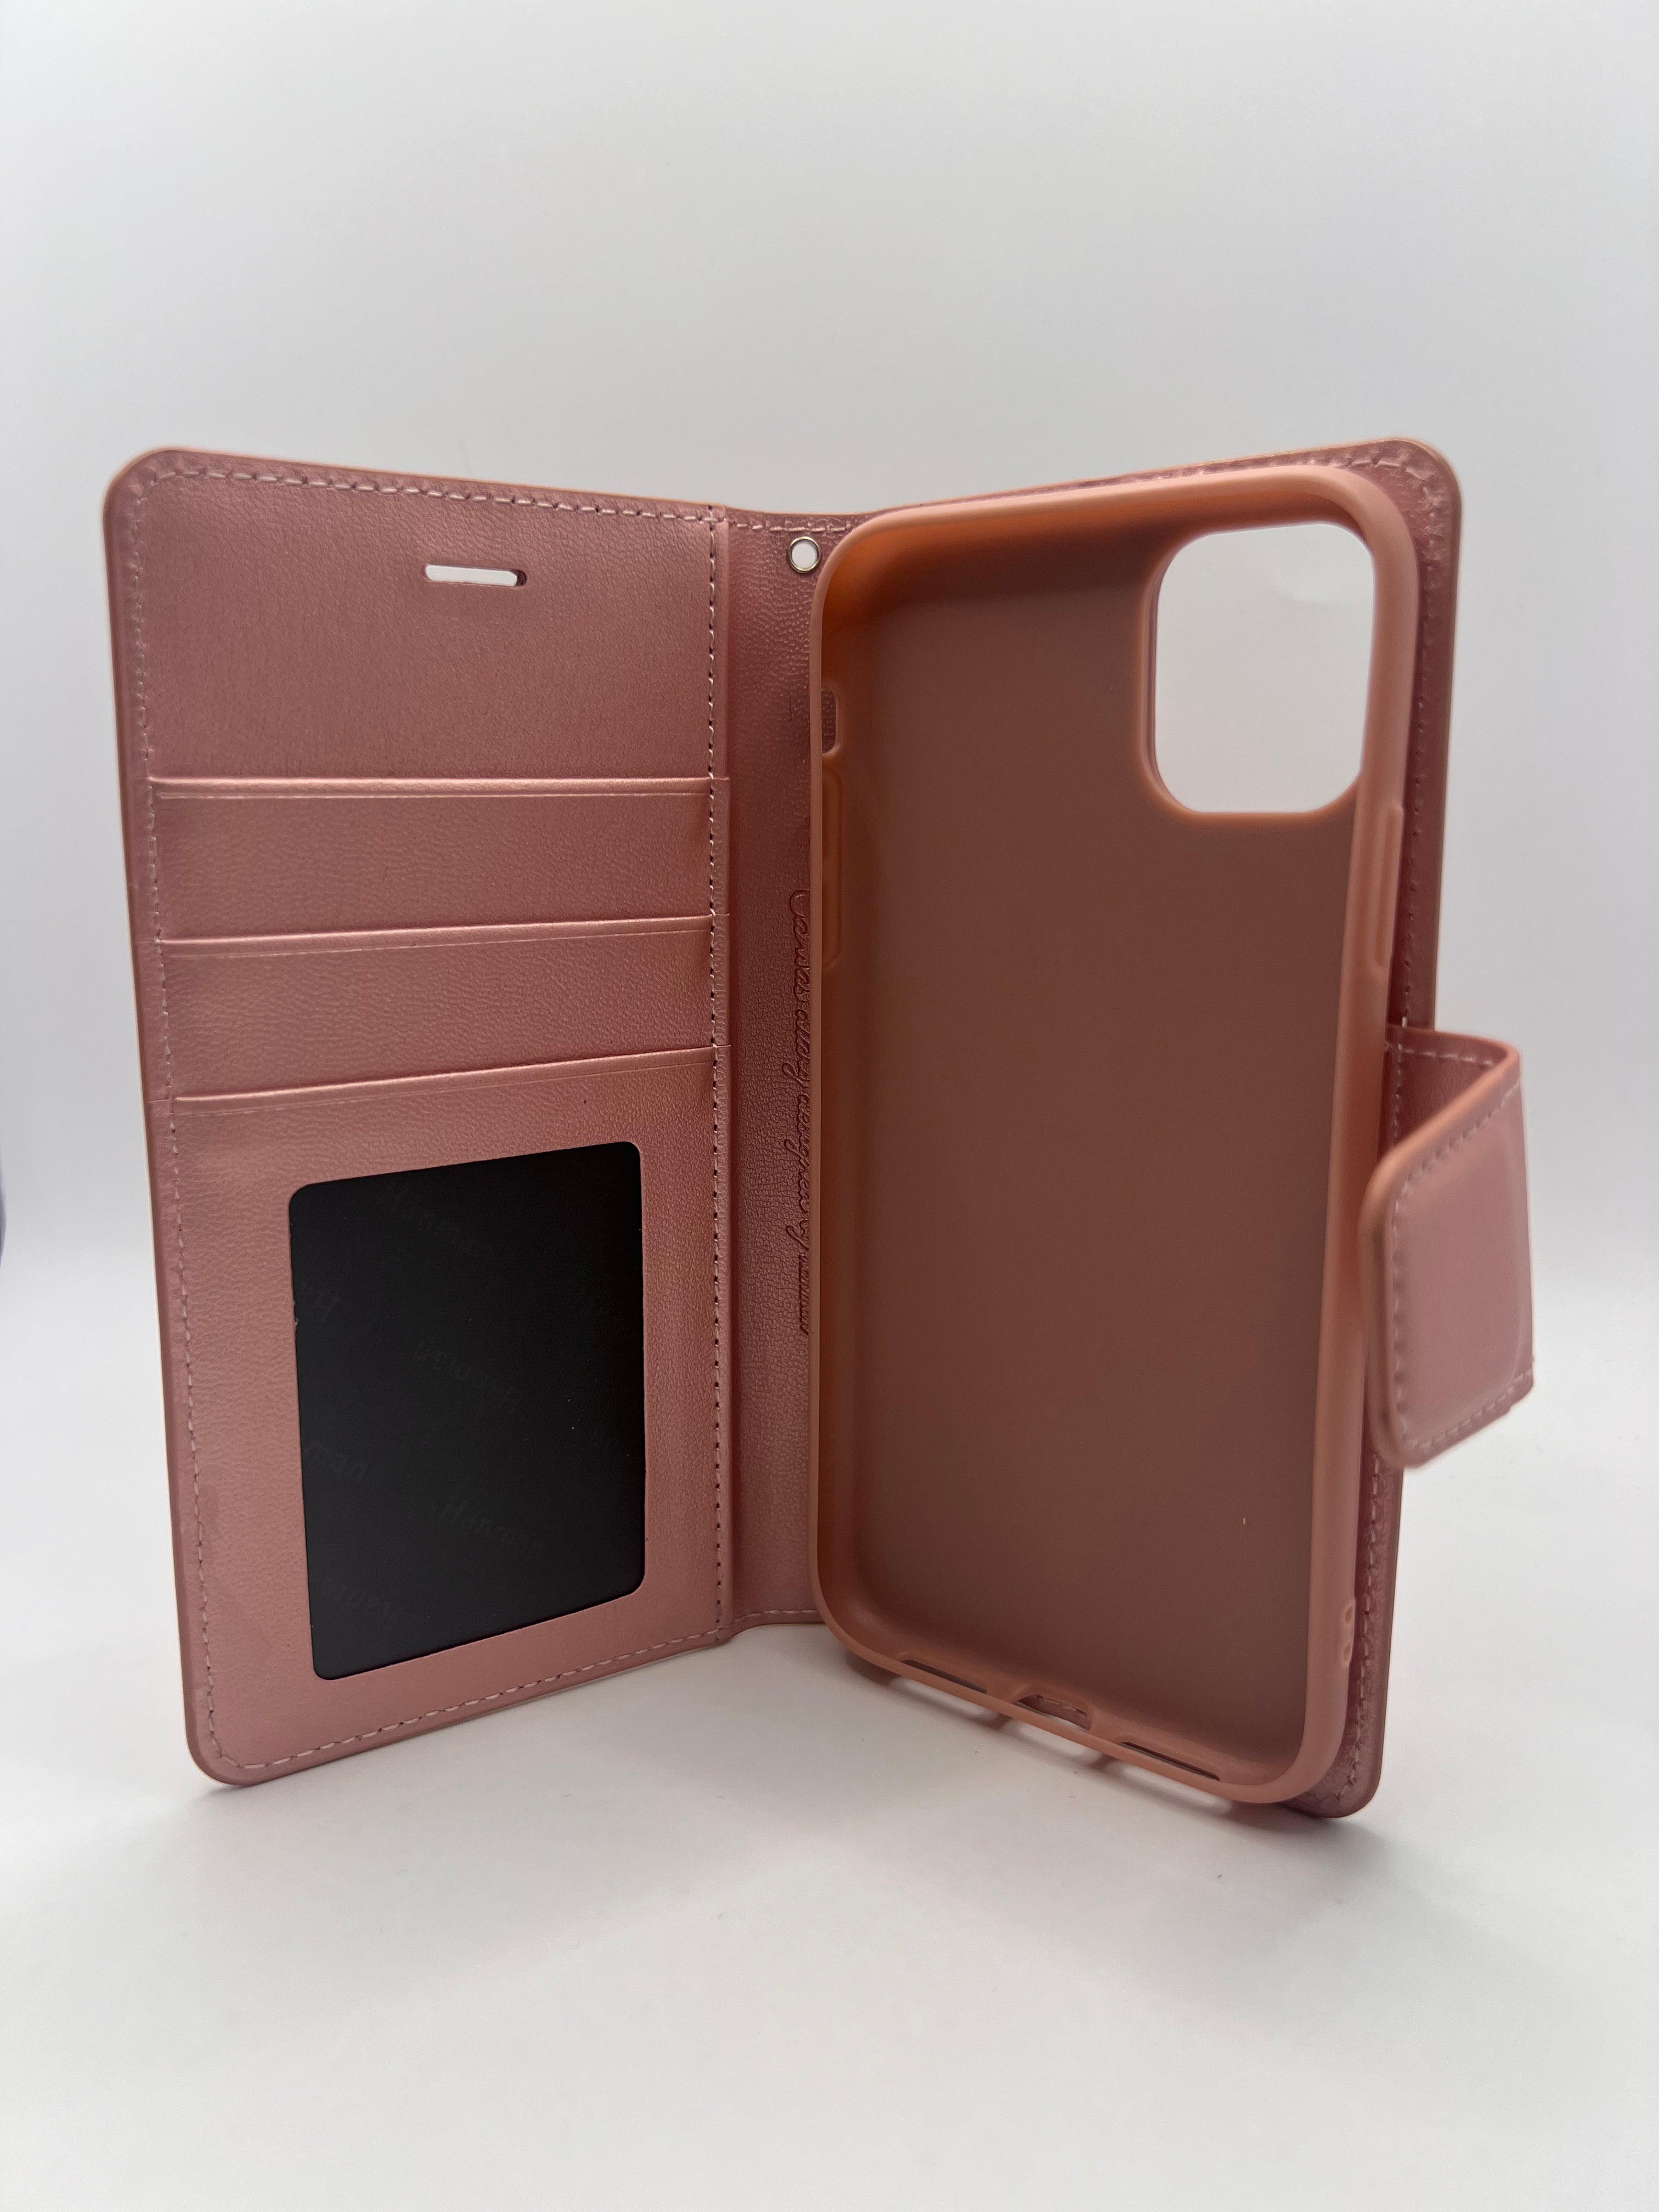 Samsung A72 Hanman Wallet Case